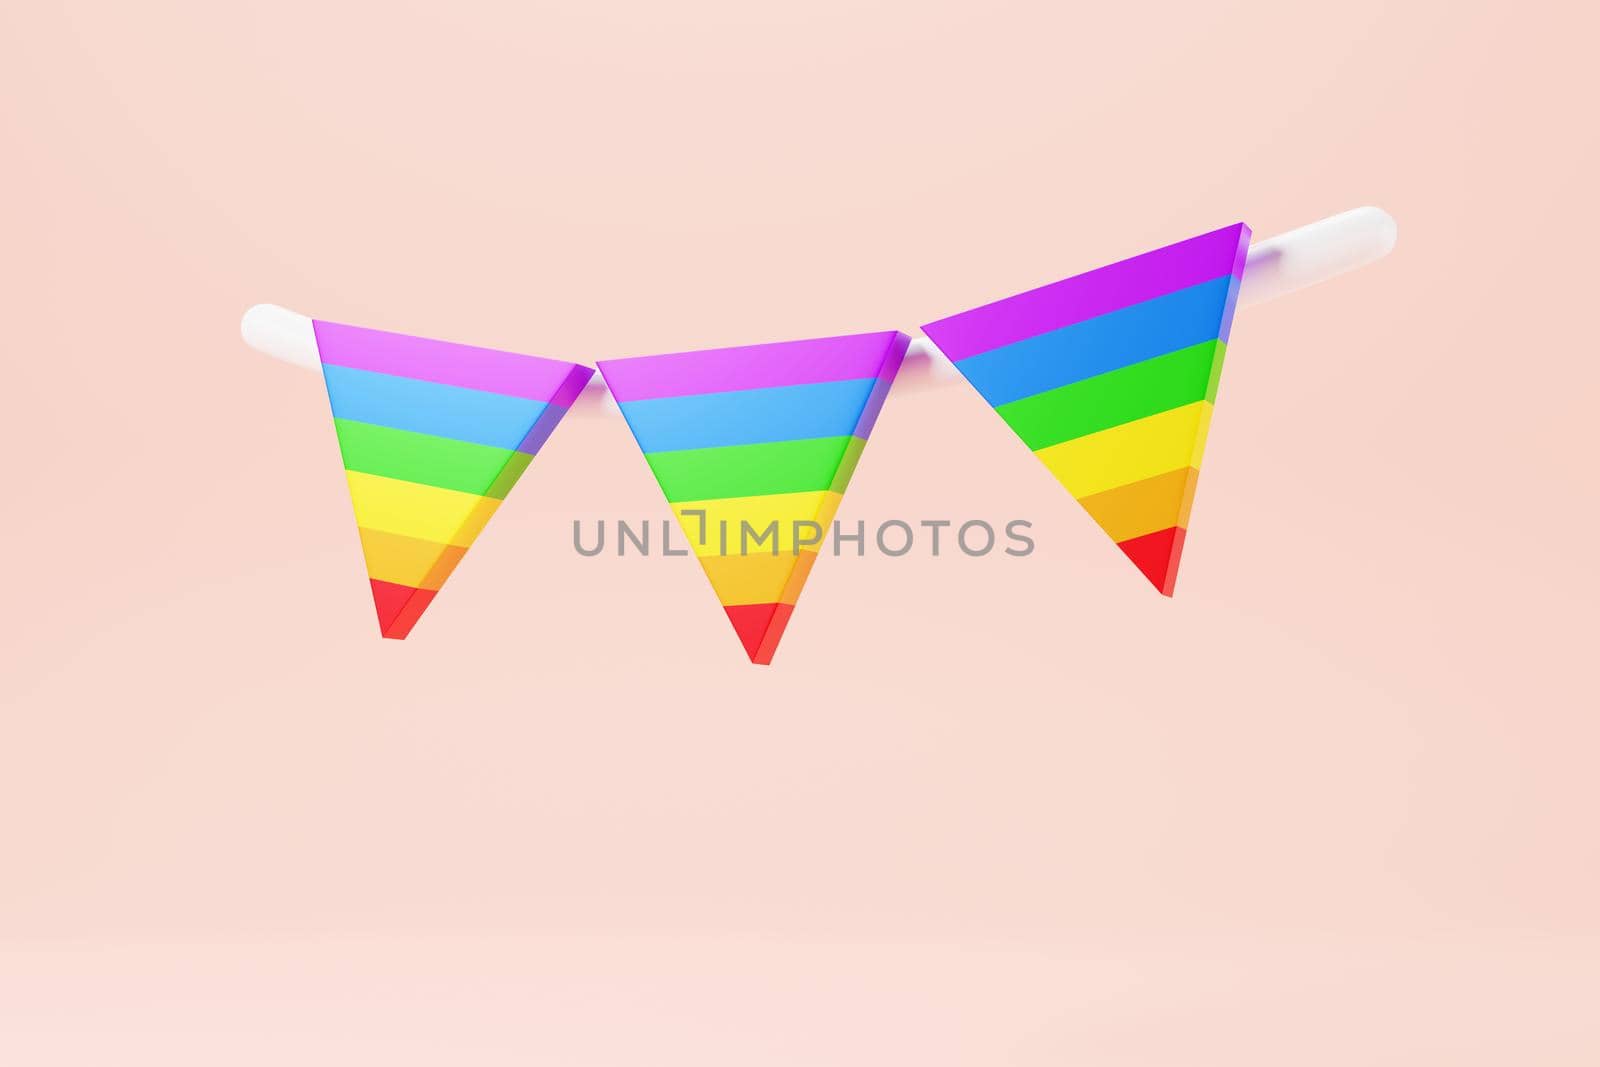 PRIDE Flag symbol for LGBTQ+. 3D Randering.